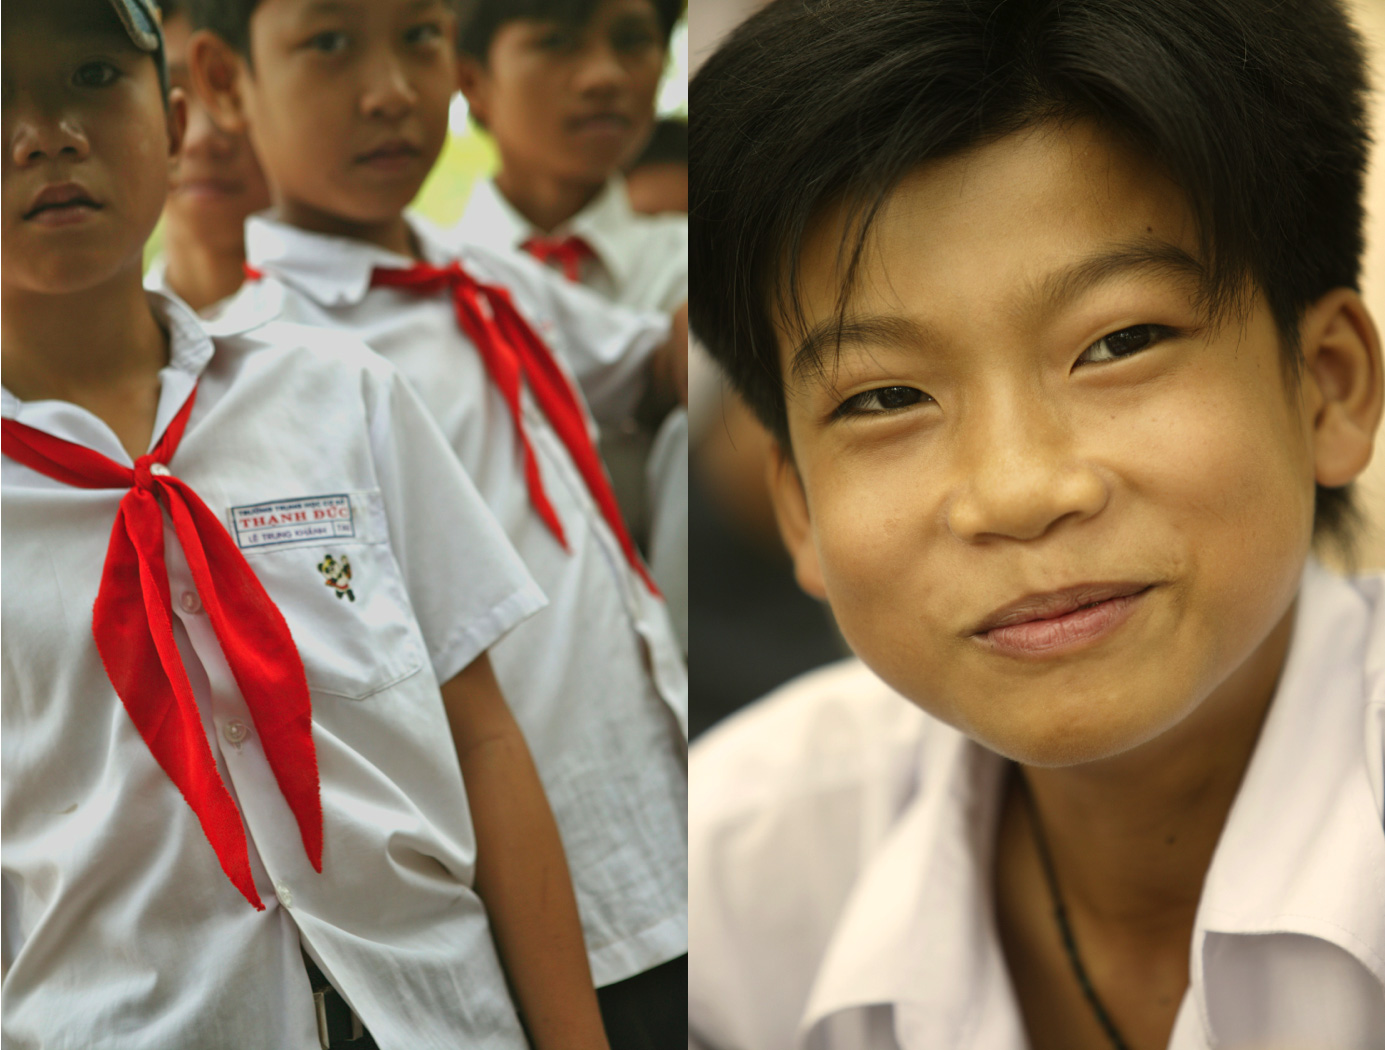 Vietmaese school boys enjoy freetime Saigon/Steve Mason Photography